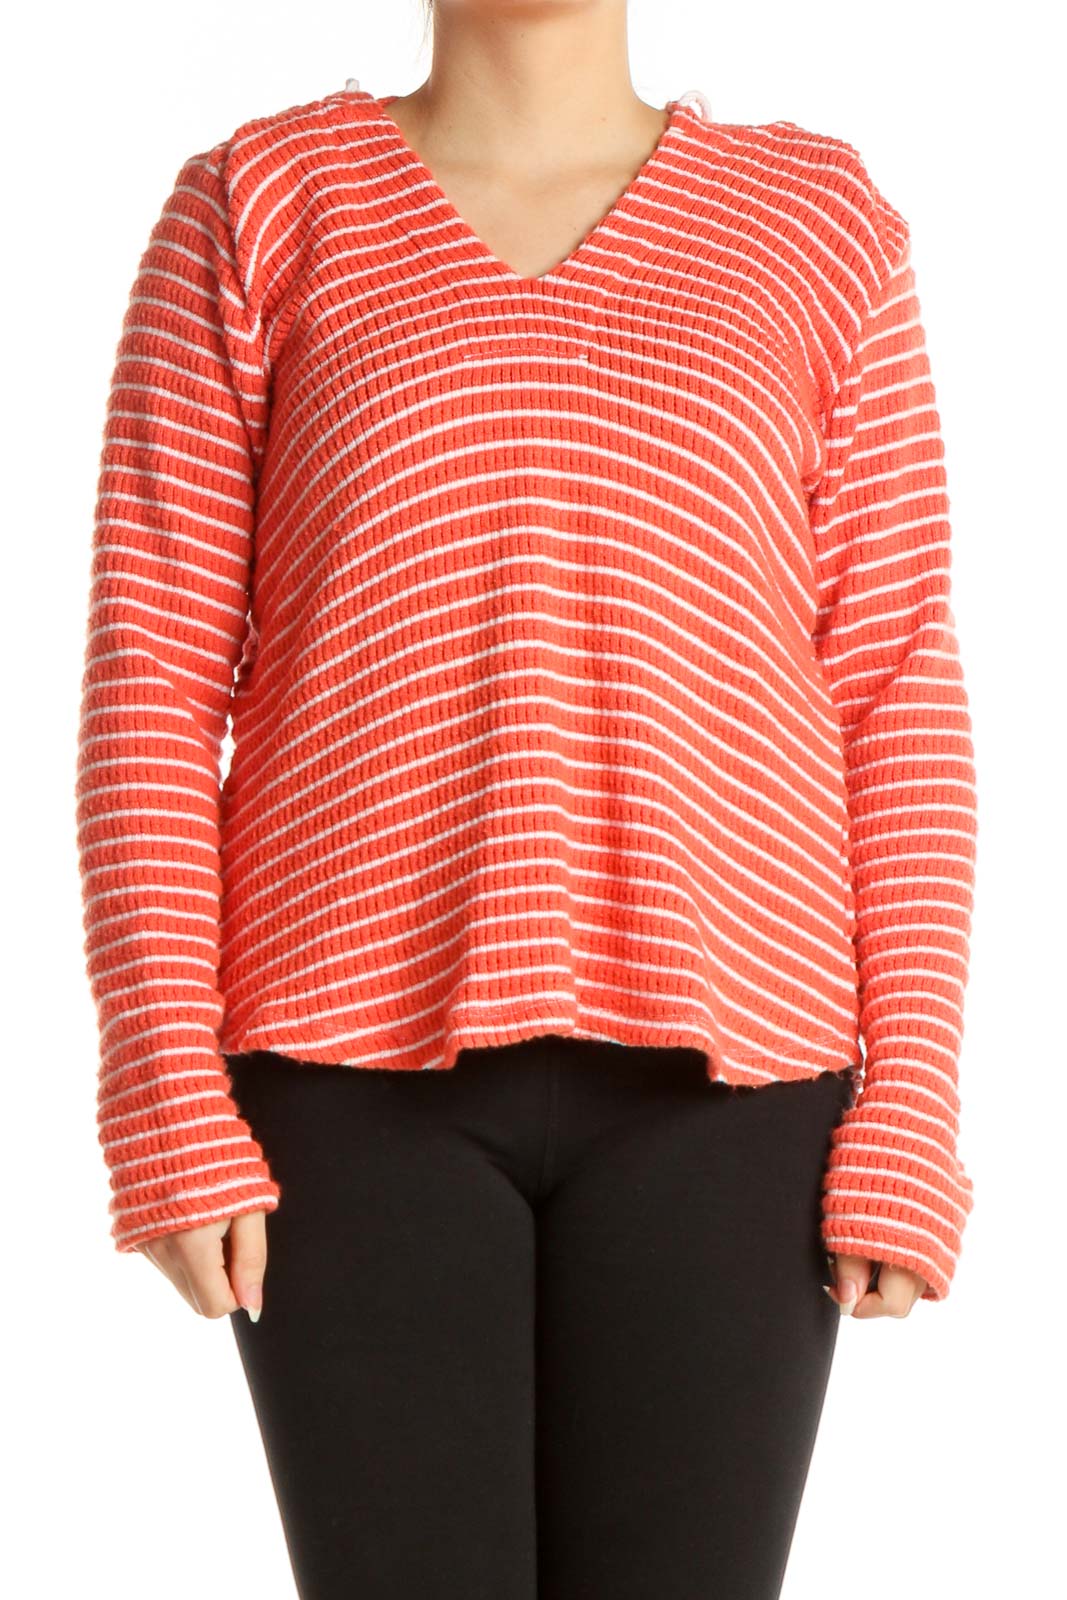 Orange Striped All Day Wear Sweater Front